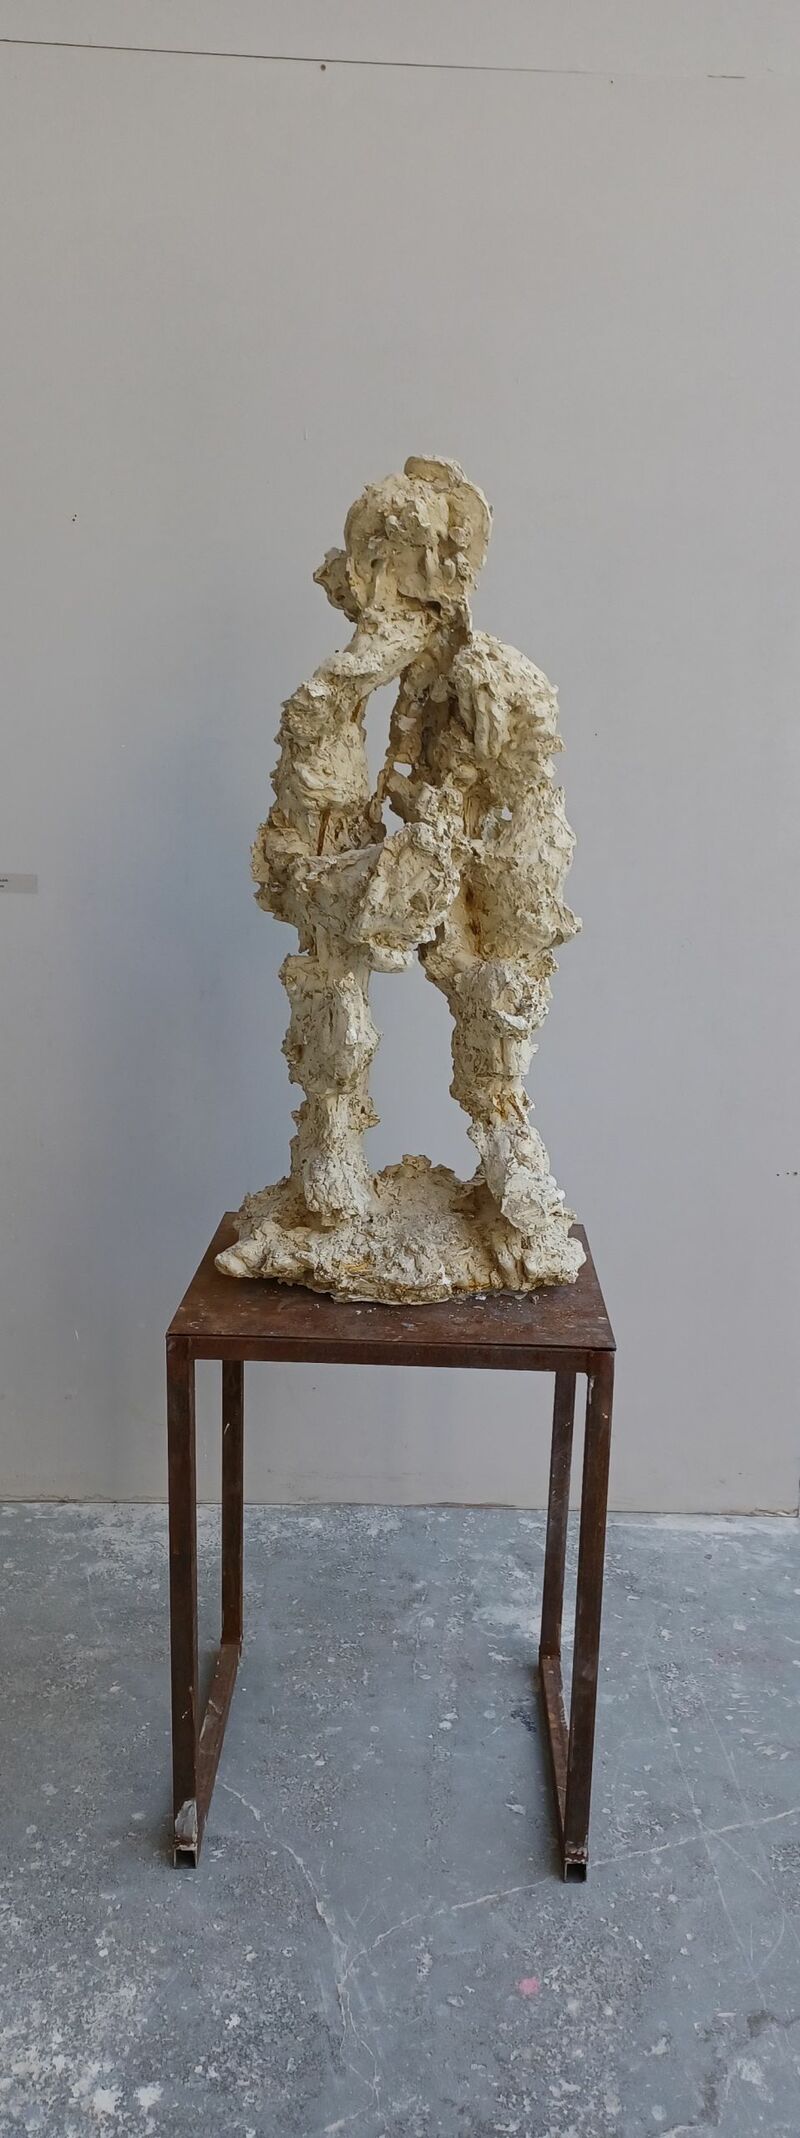 Woman - a Sculpture & Installation by Michael Jan Bublík